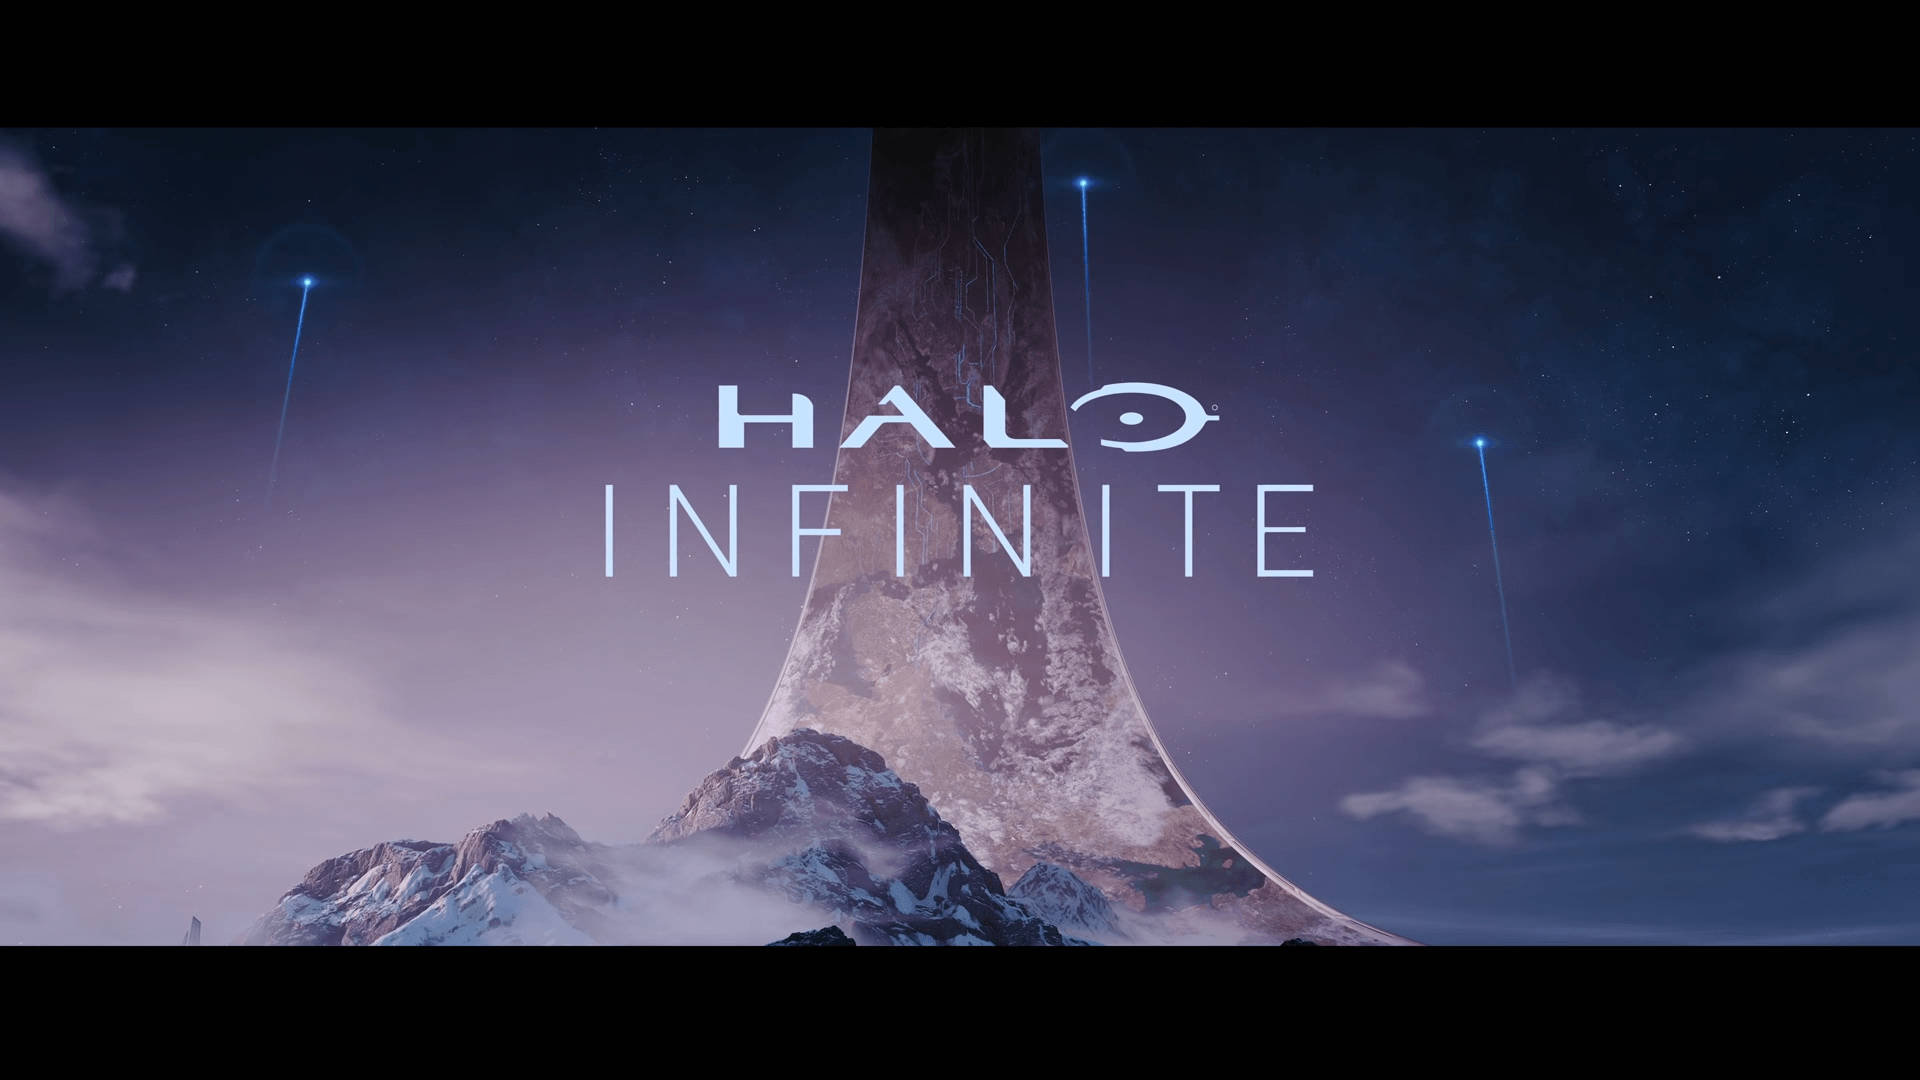 Halo Infinite Spaceships In Sky Wallpaper